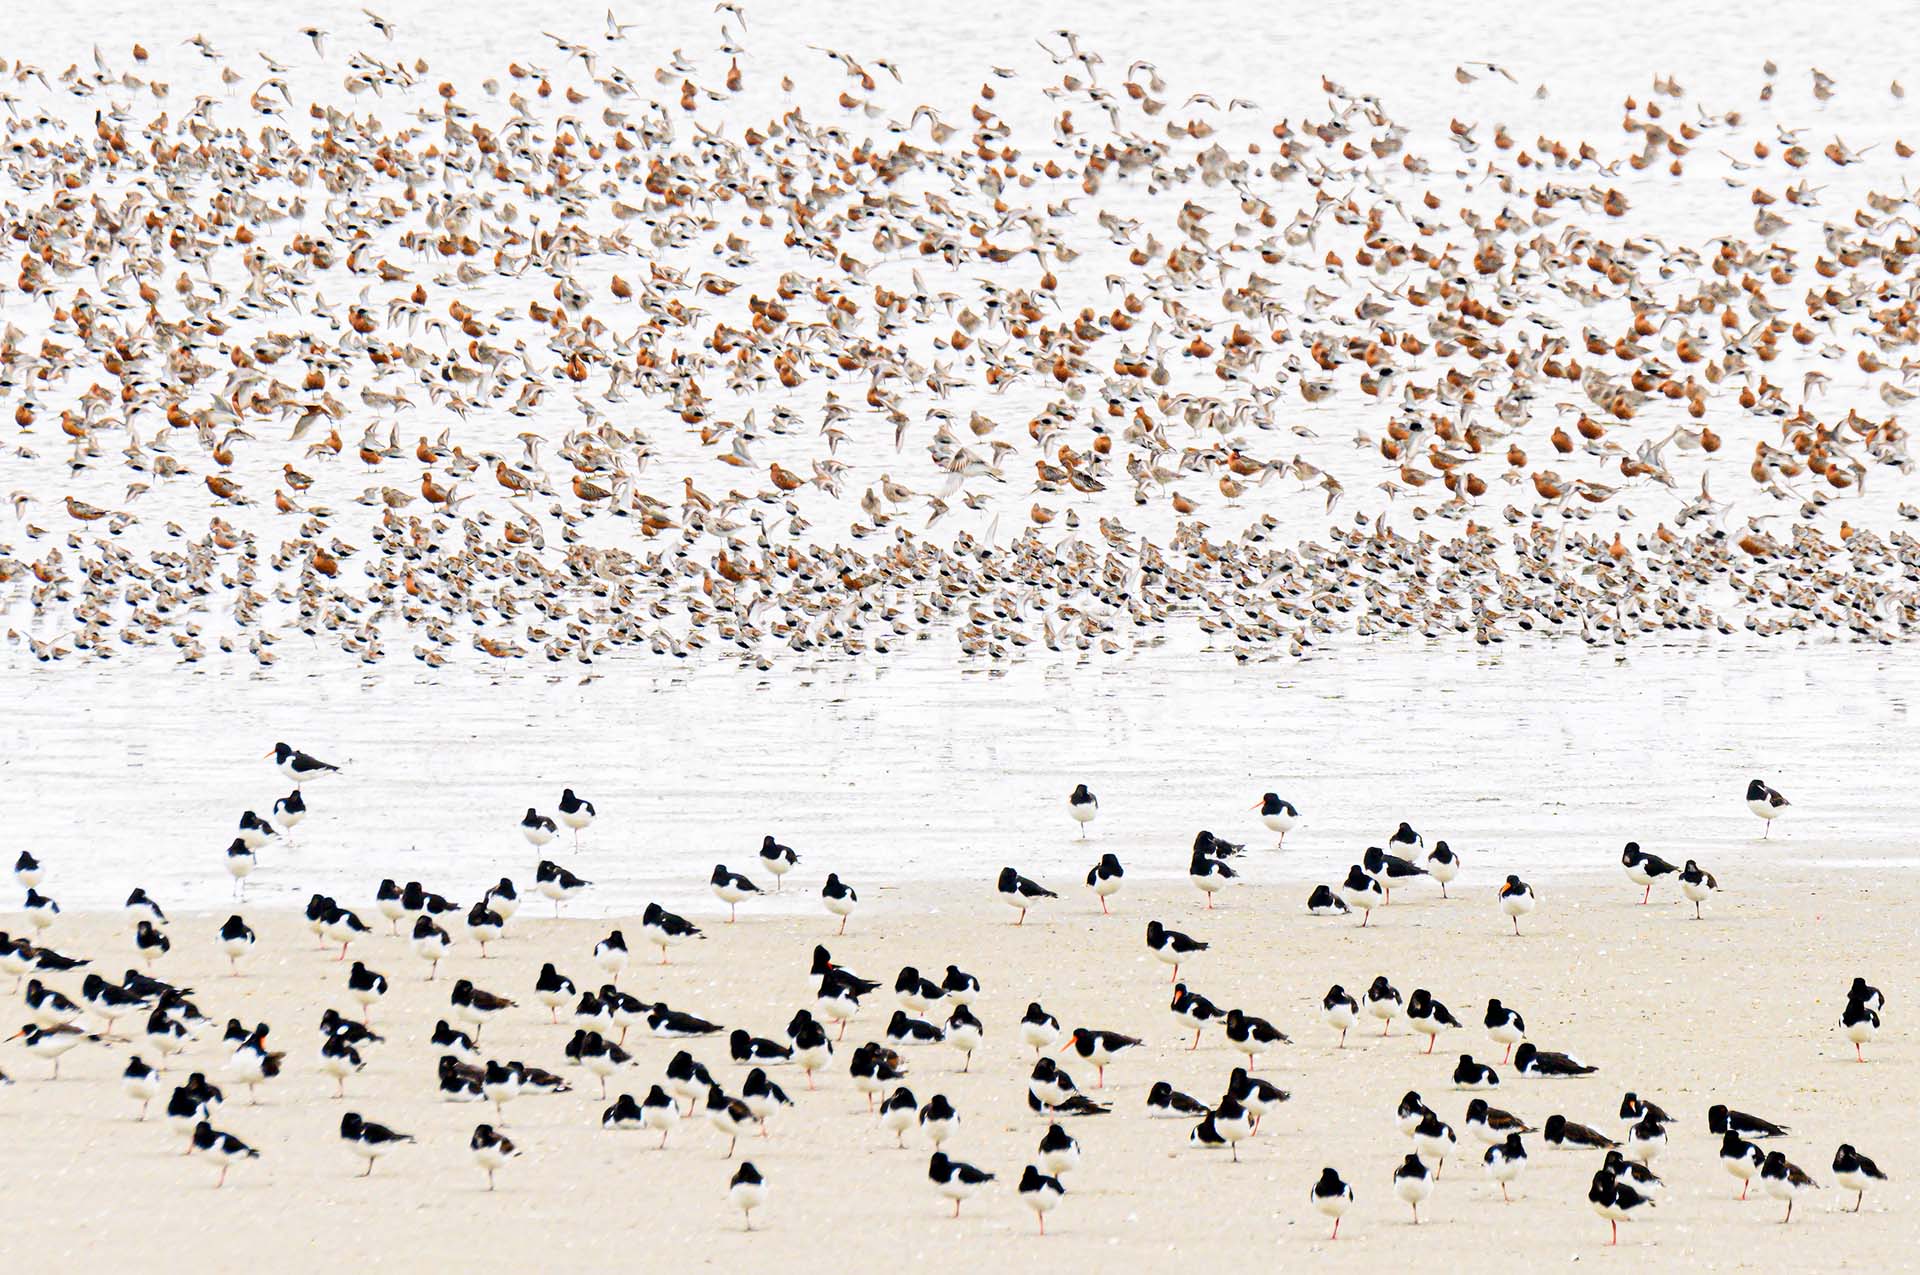 Shorebirds in the Wadden Sea